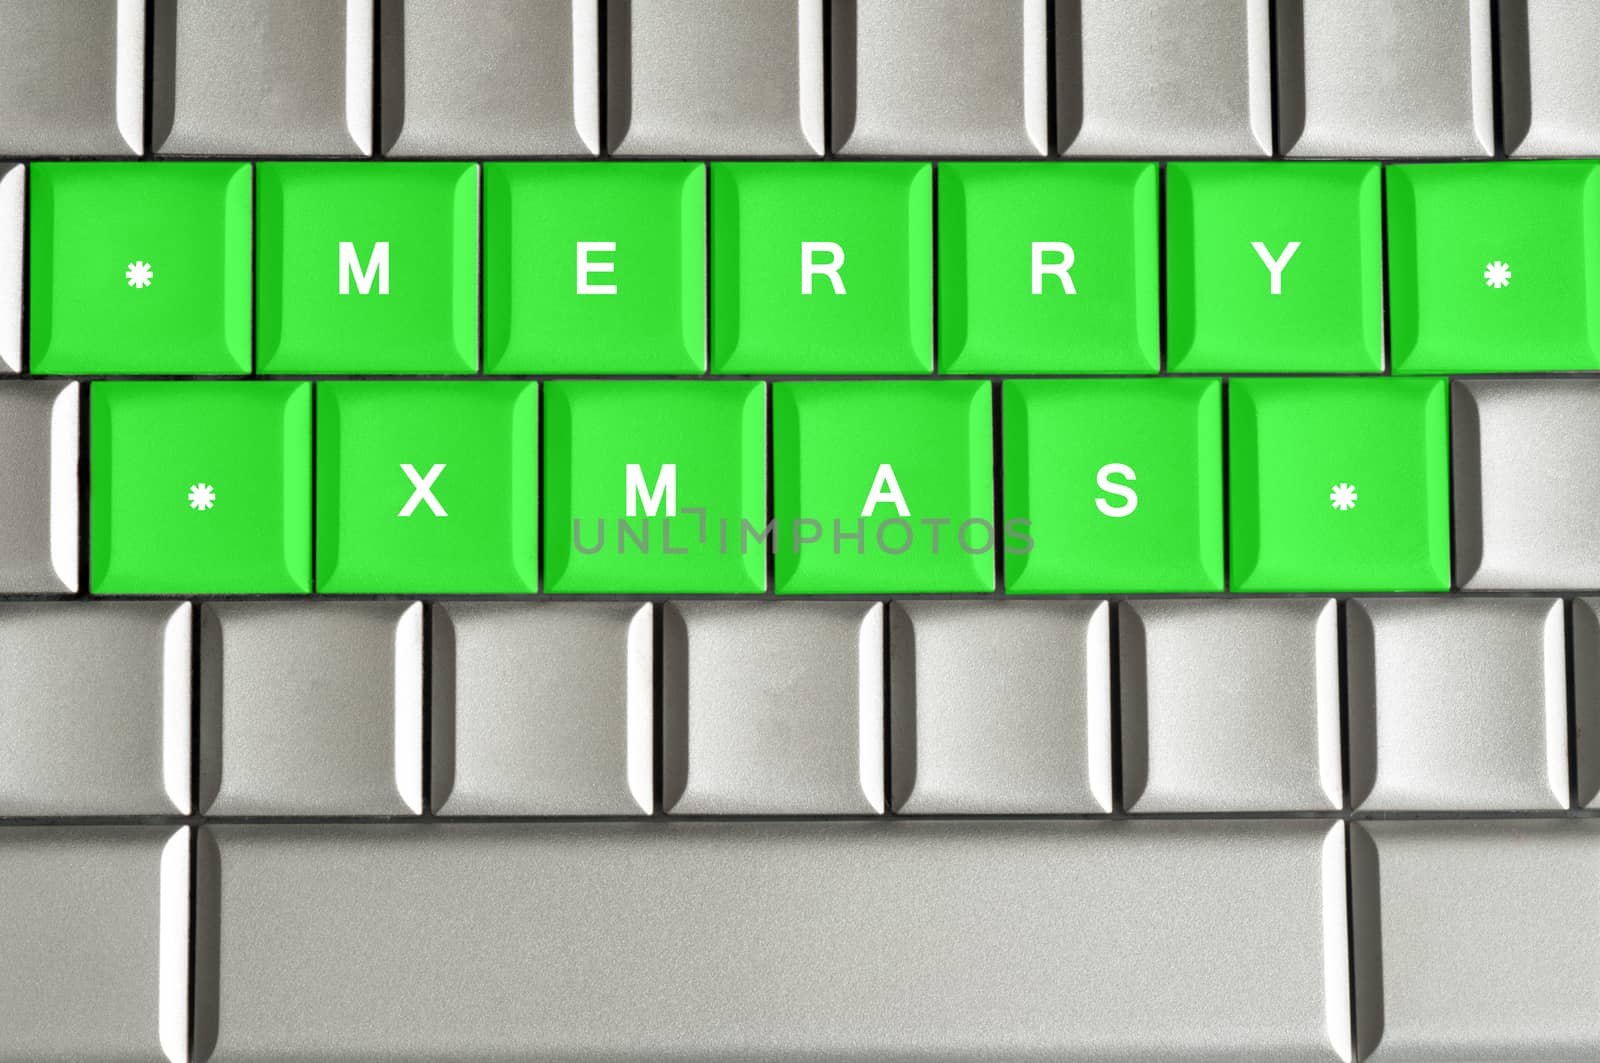 Merry Xmas spelled on a metallic keyboard by daoleduc